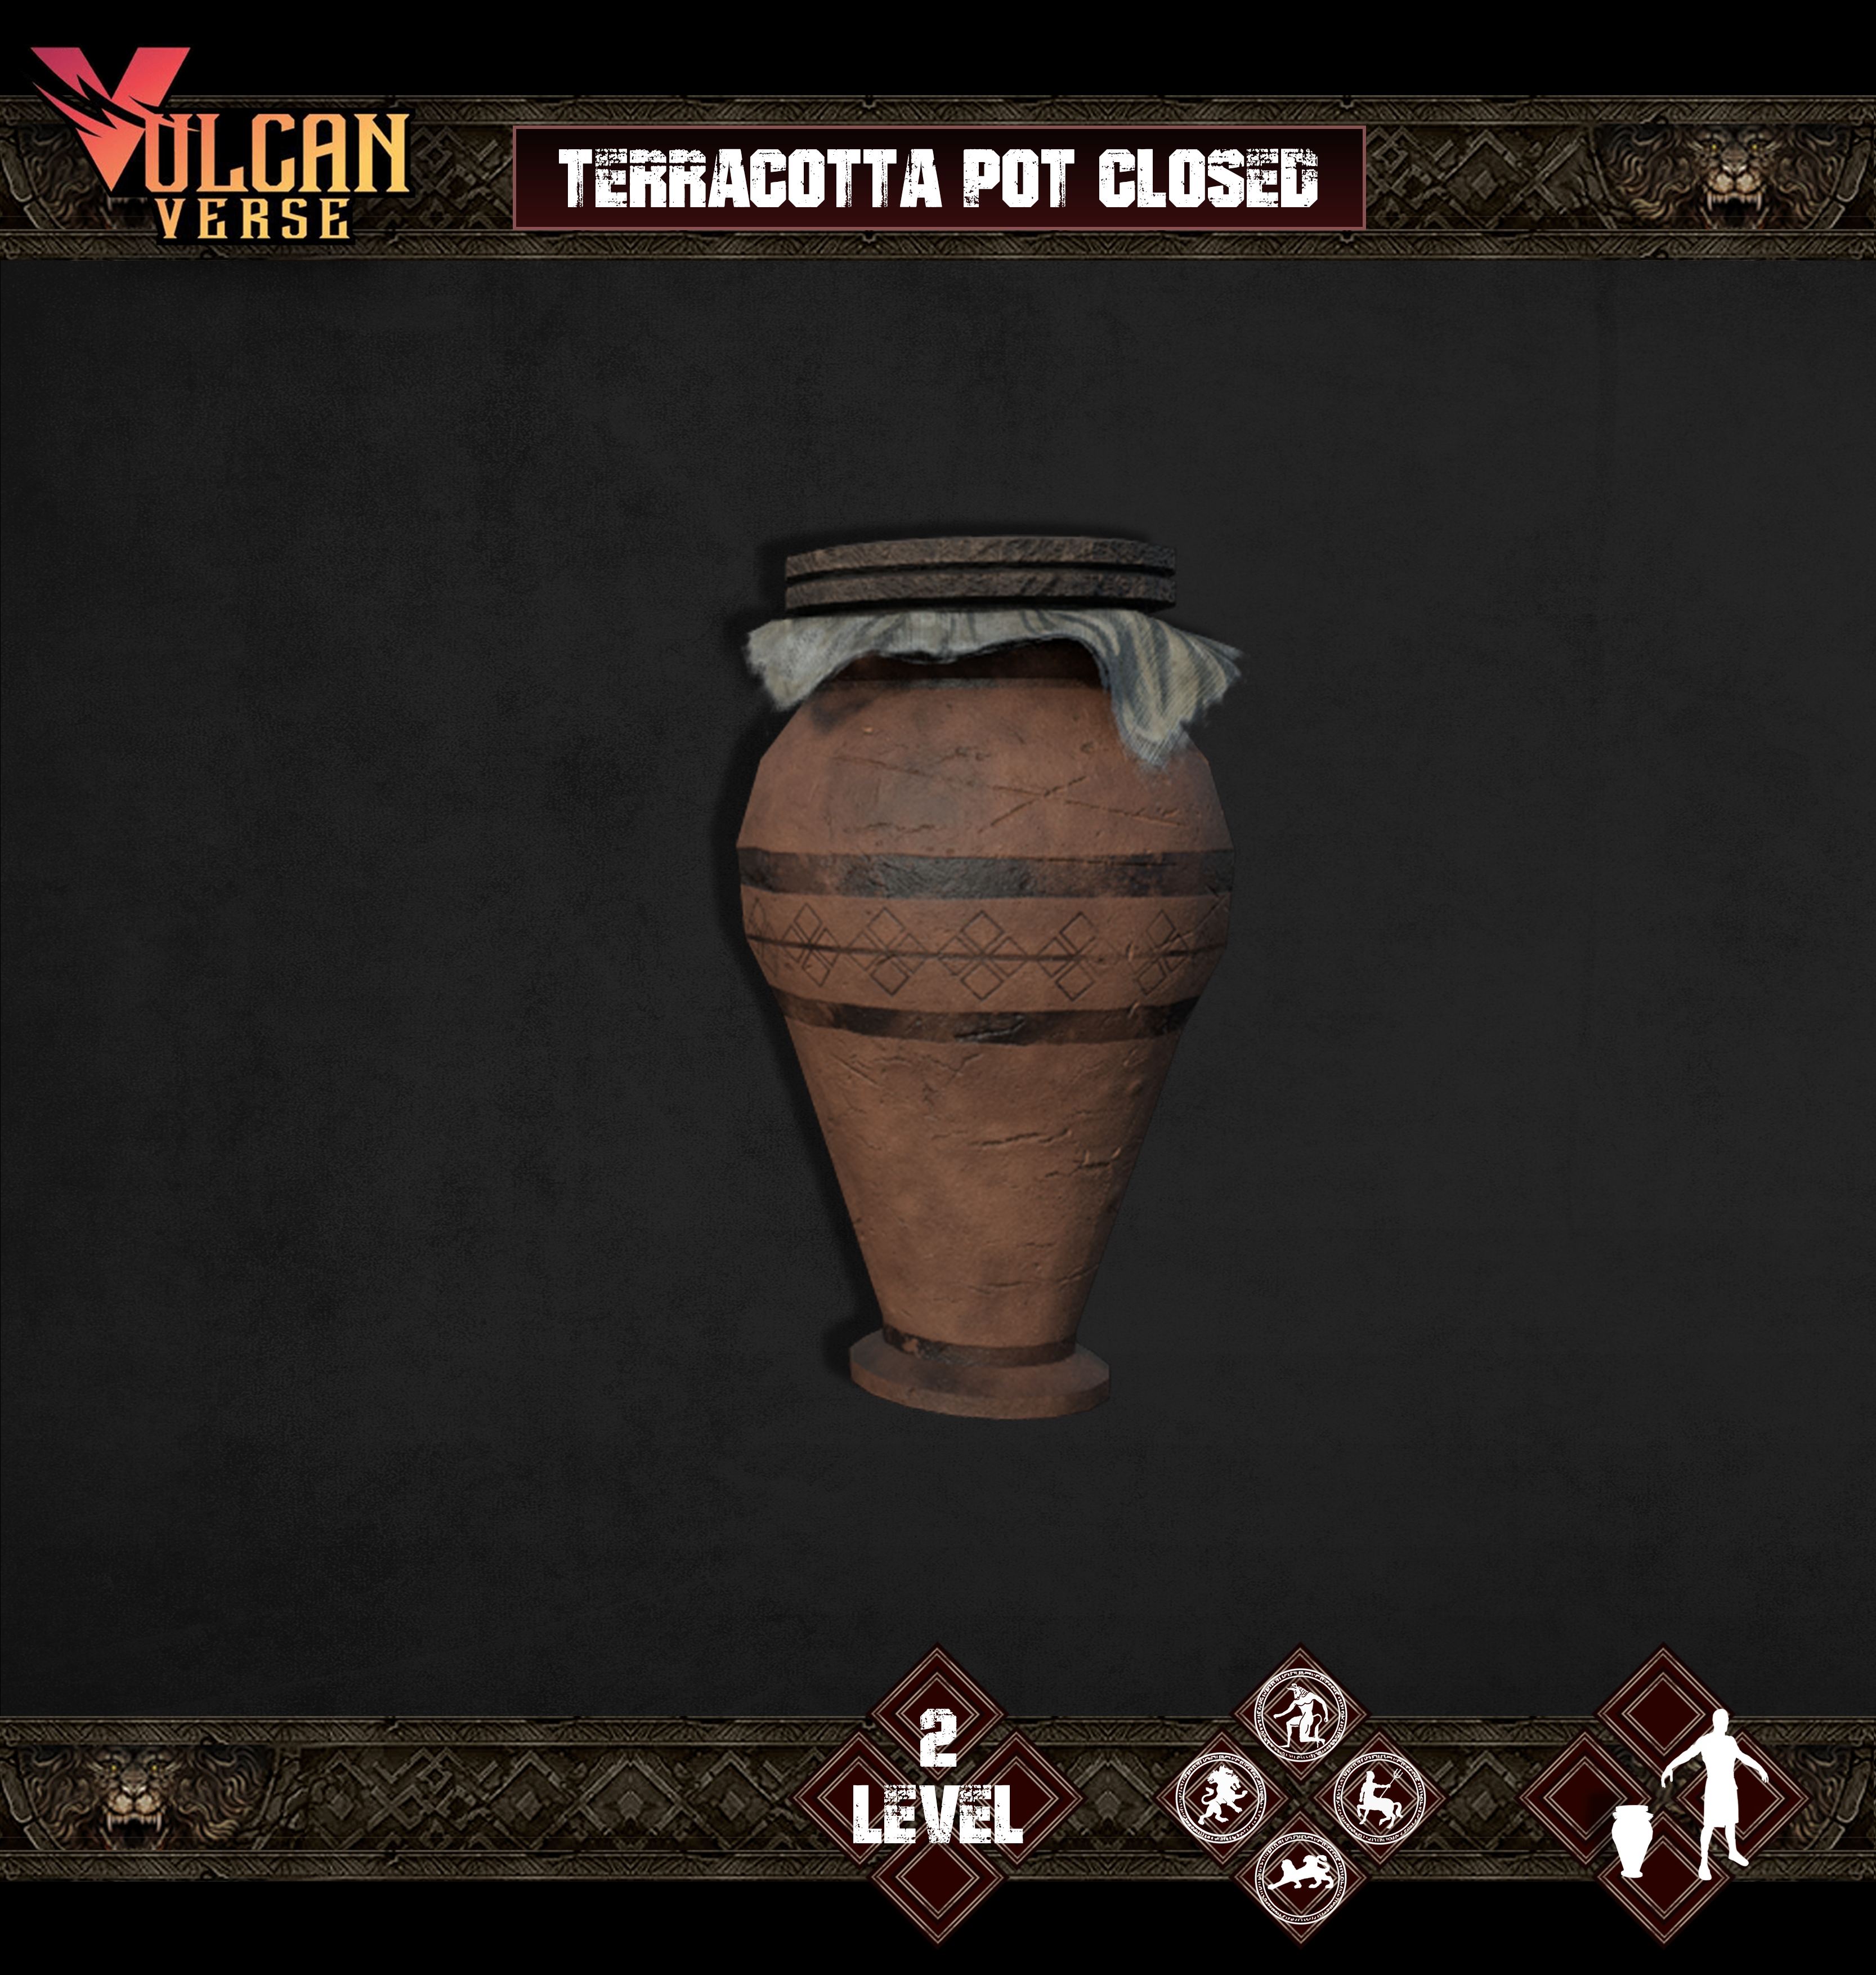 Terracotta Pot closed